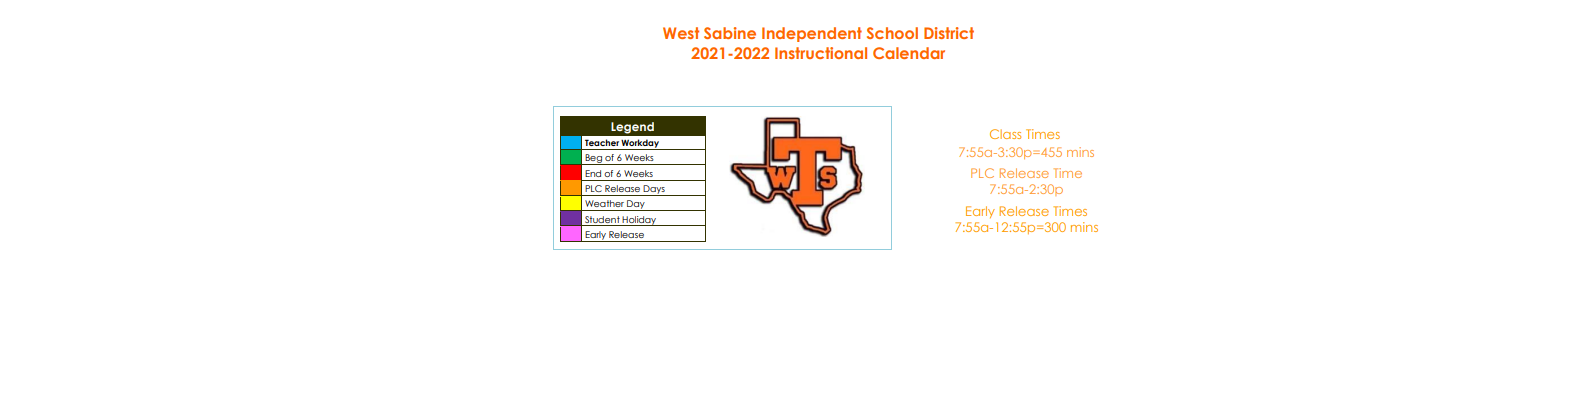 District School Academic Calendar Key for West Sabine Elementary